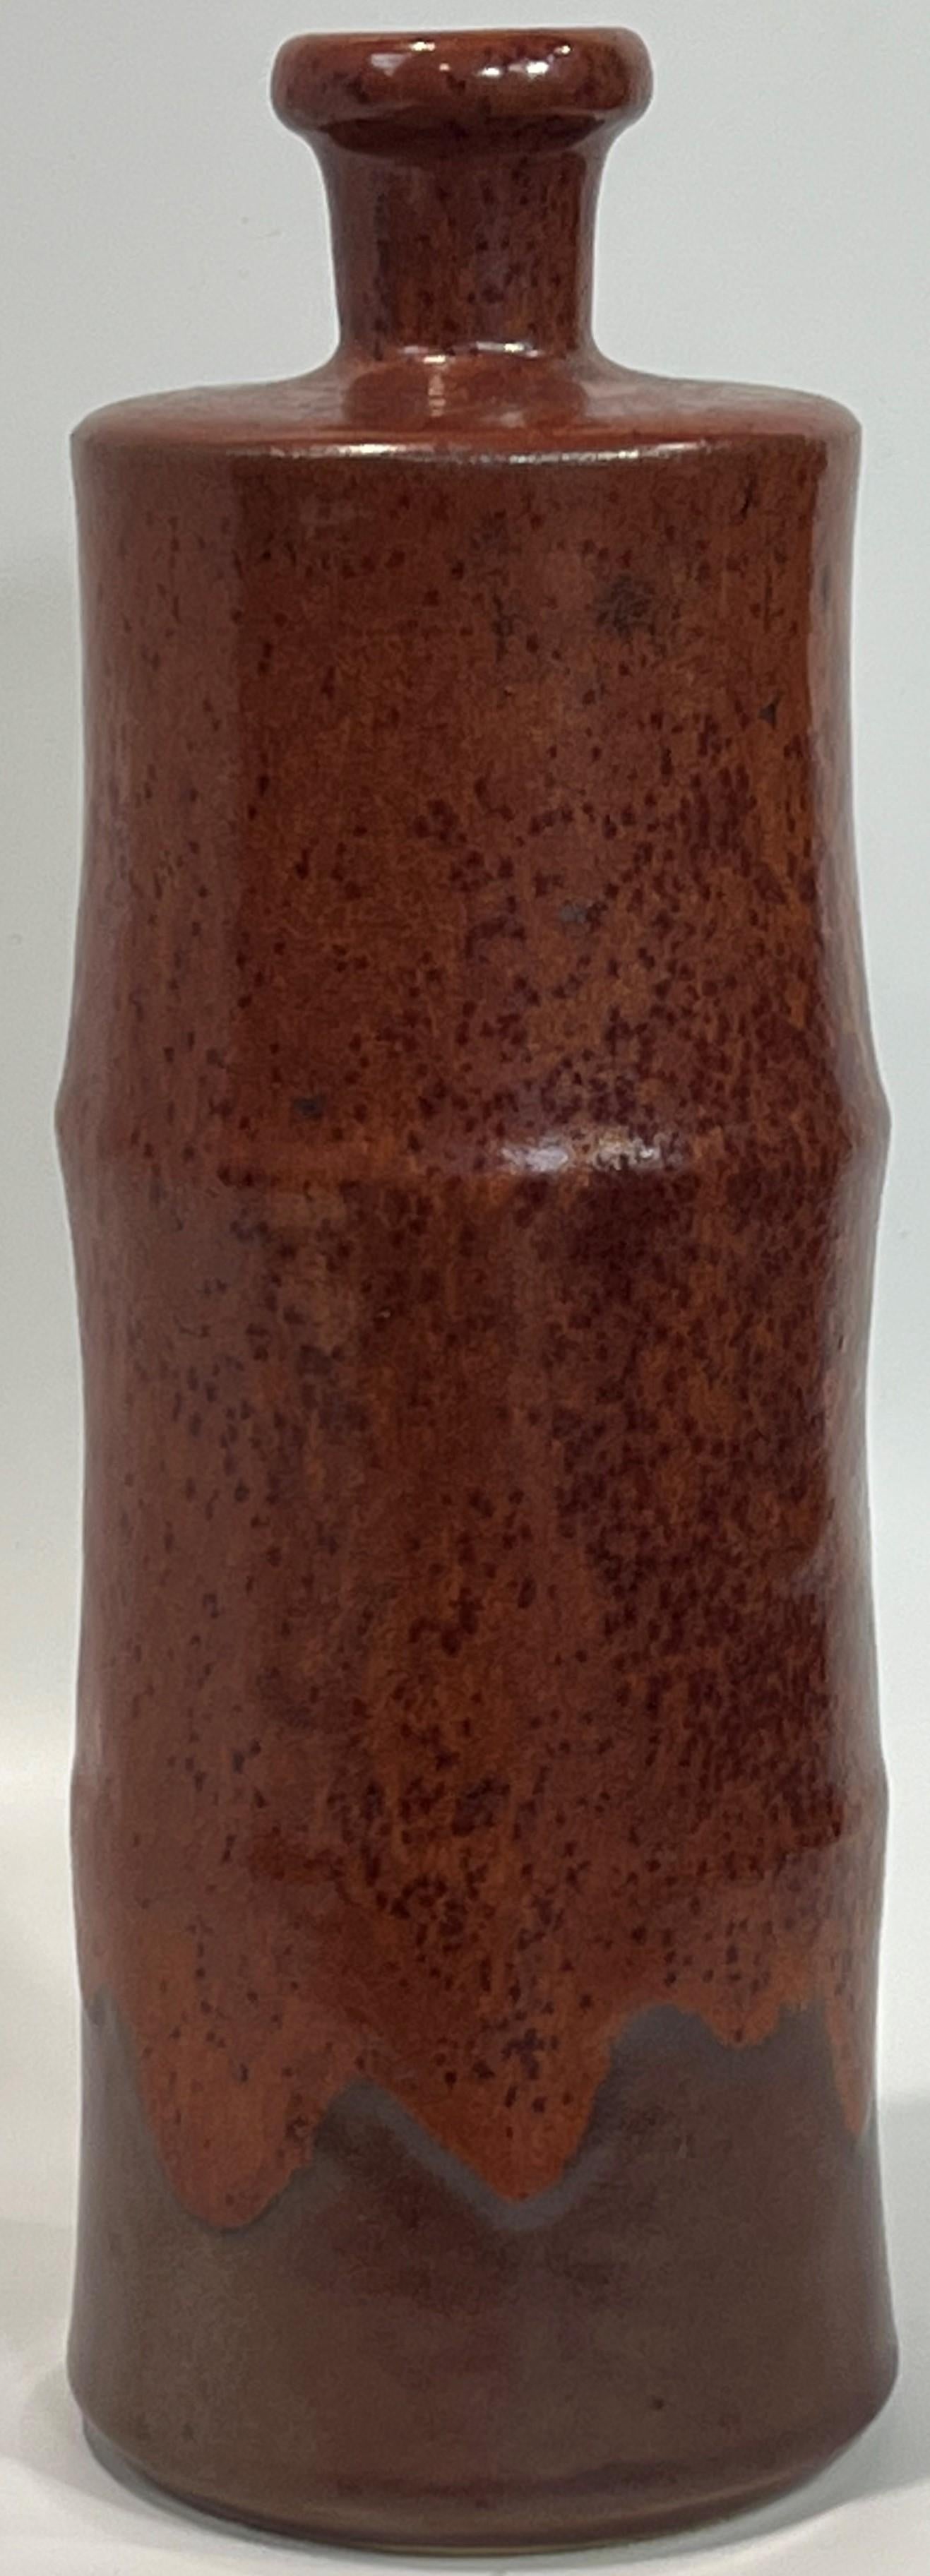 Late 20th Century Horst Kerstan Bottle Vase Large Fantastic Brown Micro-Crystalline over Brown